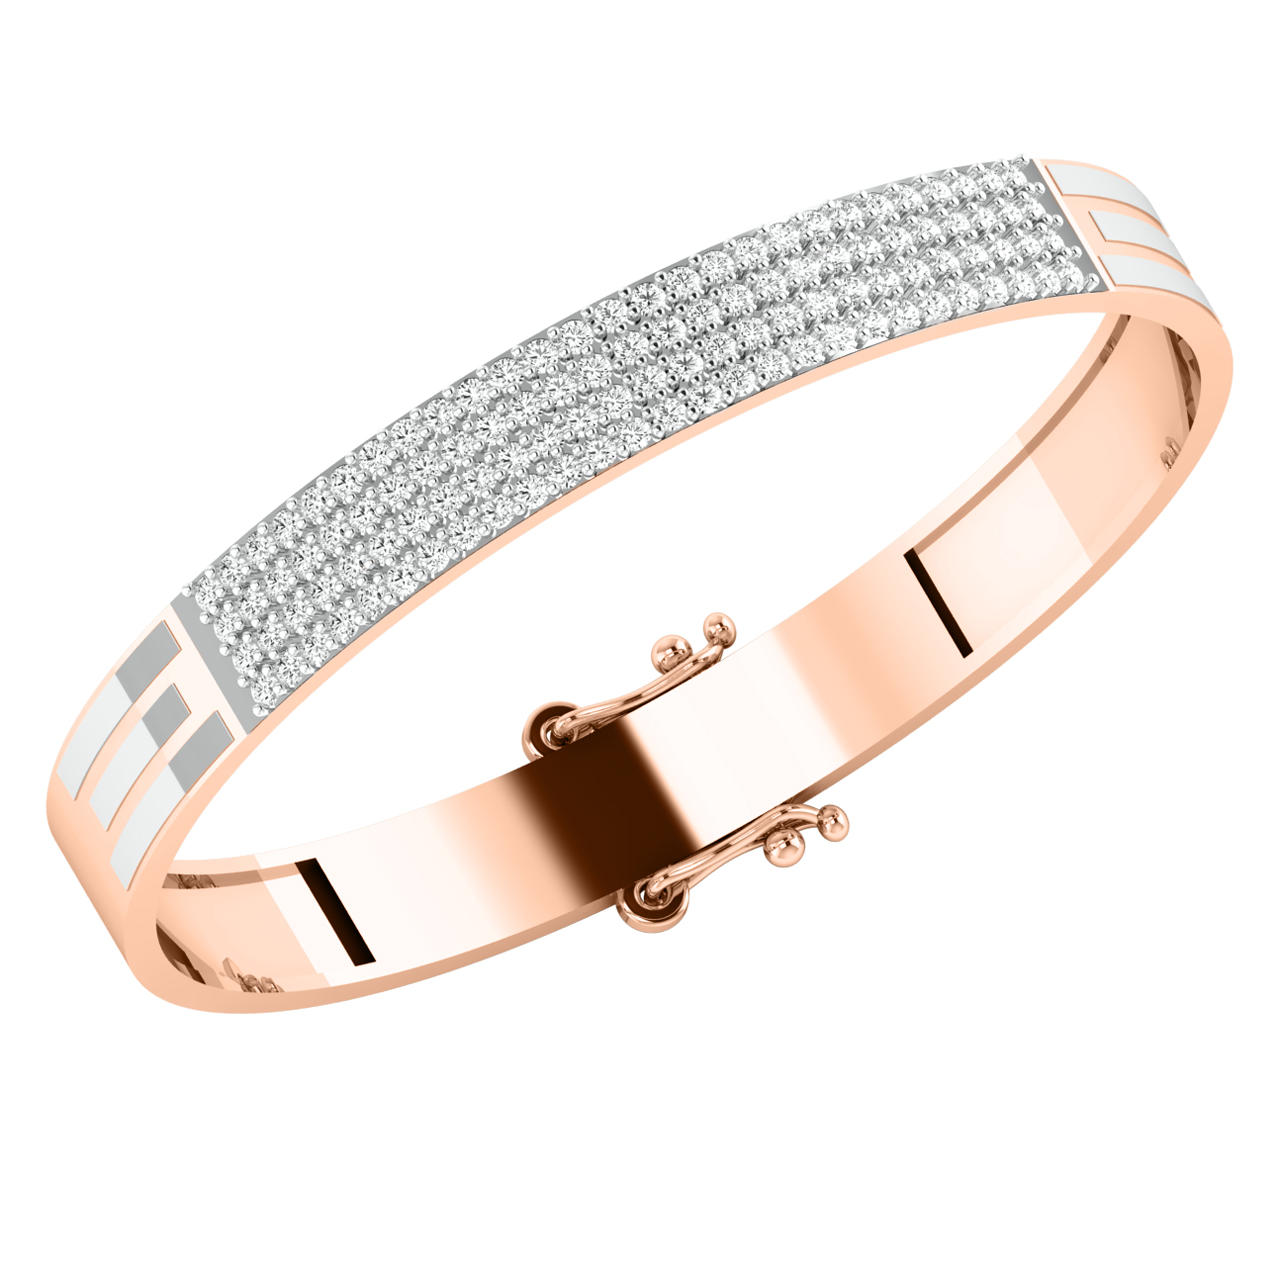 100 unique workwear diamond bracelets | Jewelry bracelets gold, Diamond  bracelet design, Diamond jewelry designs